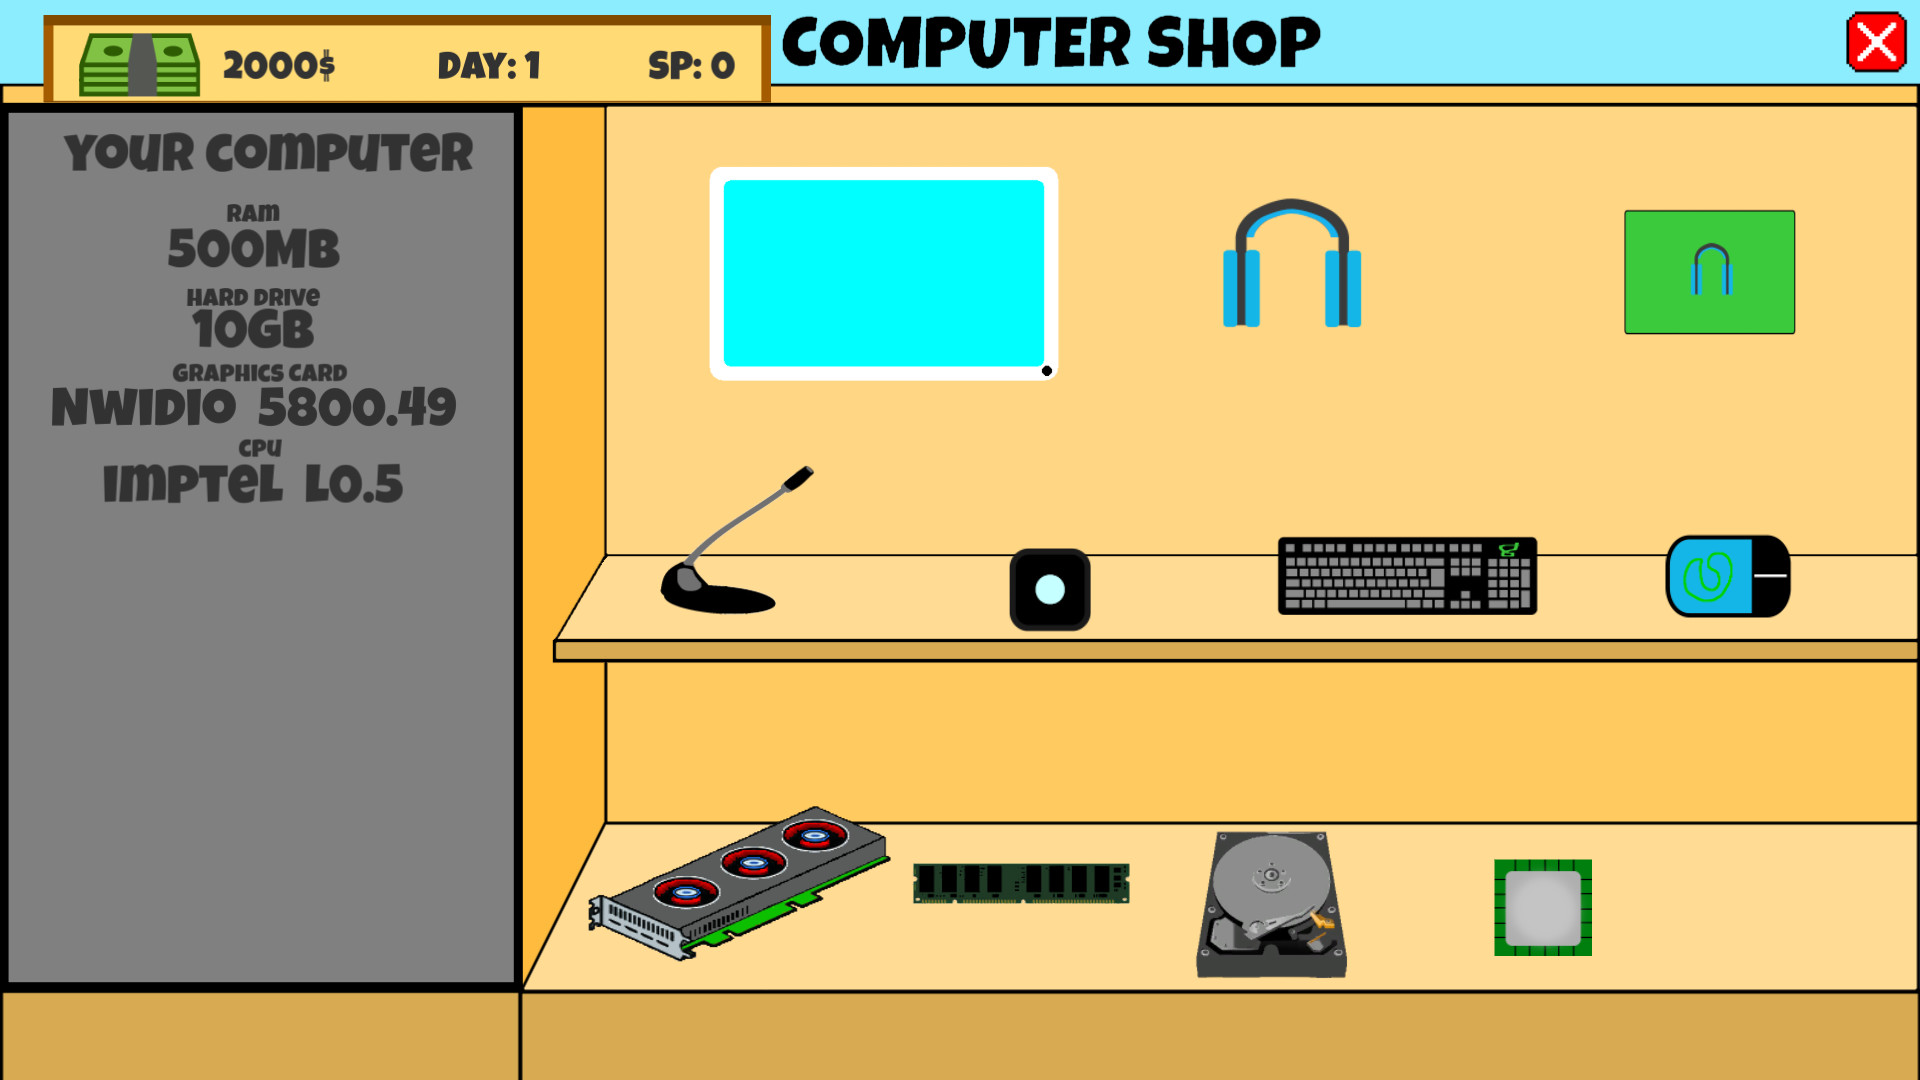 Streamer Simulator screenshot